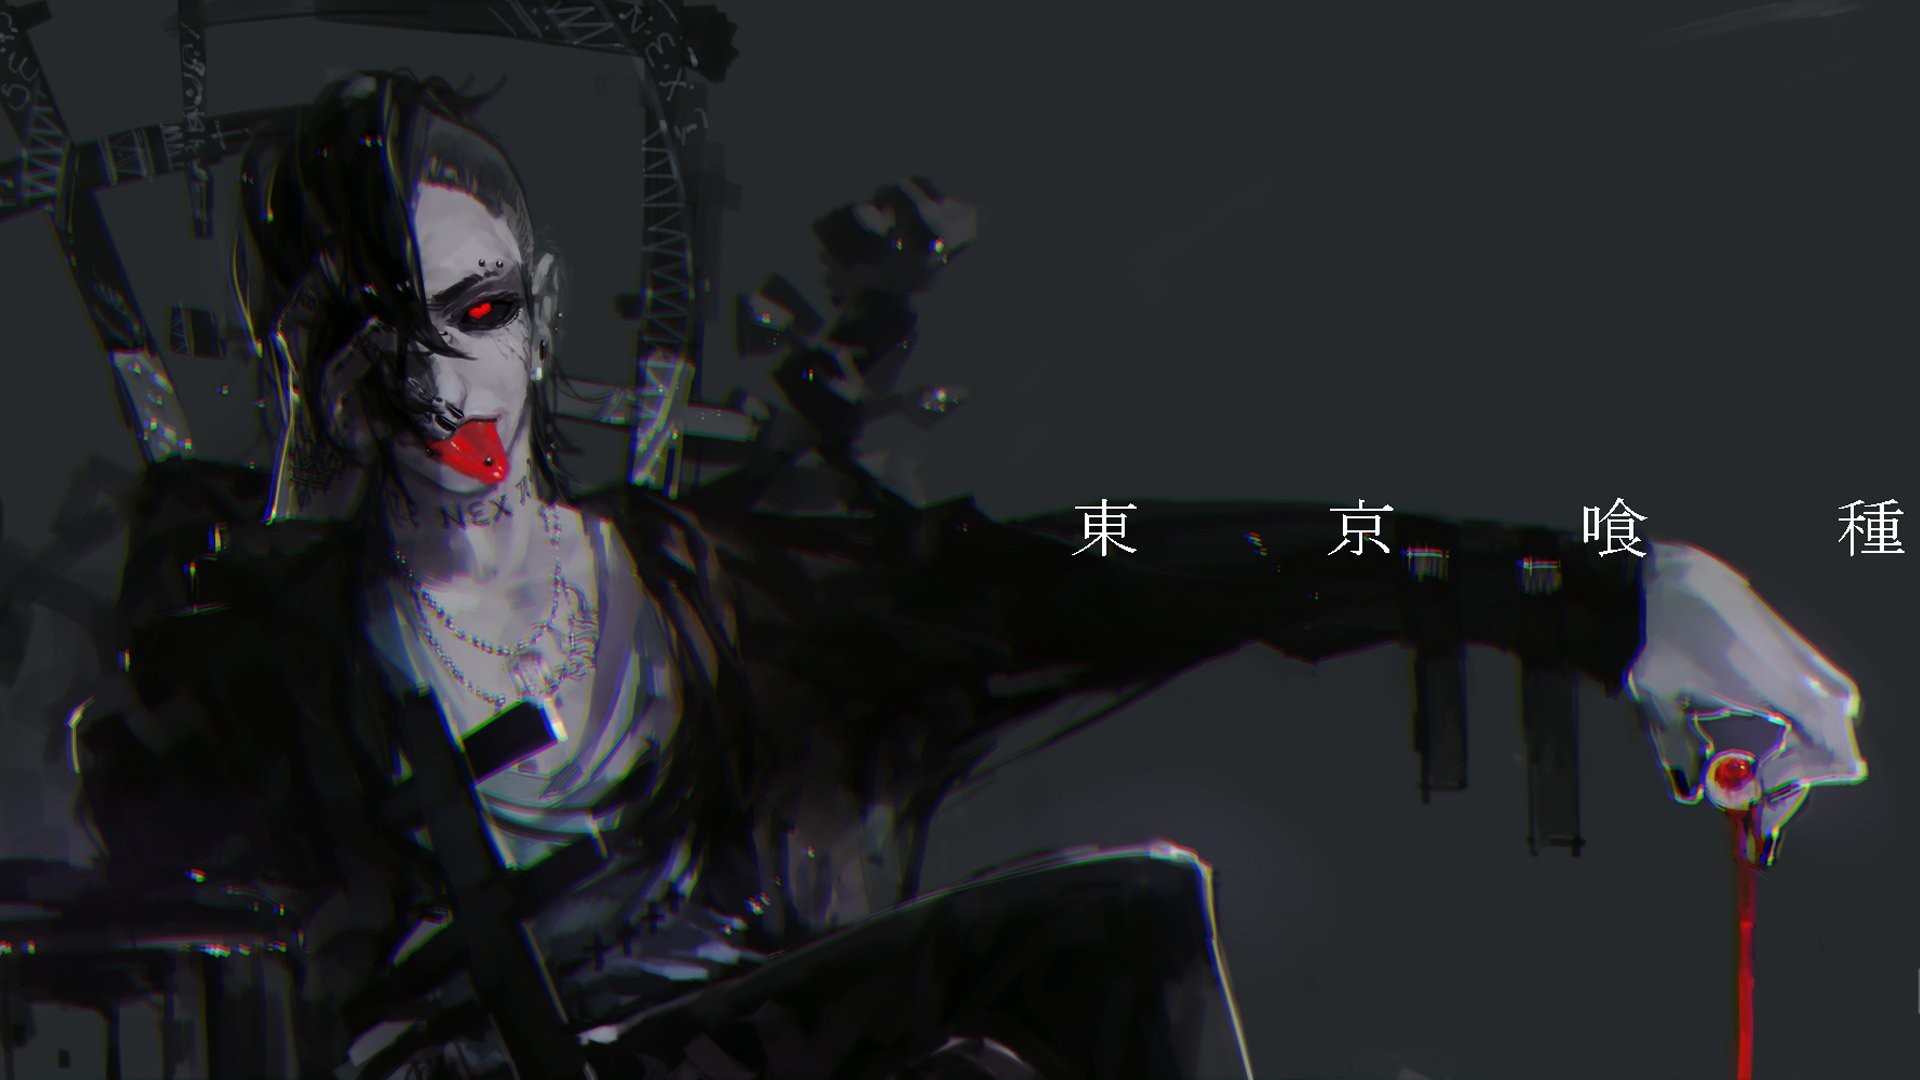 Tokyo Ghoul Uta HD Wallpaper Background ID596589